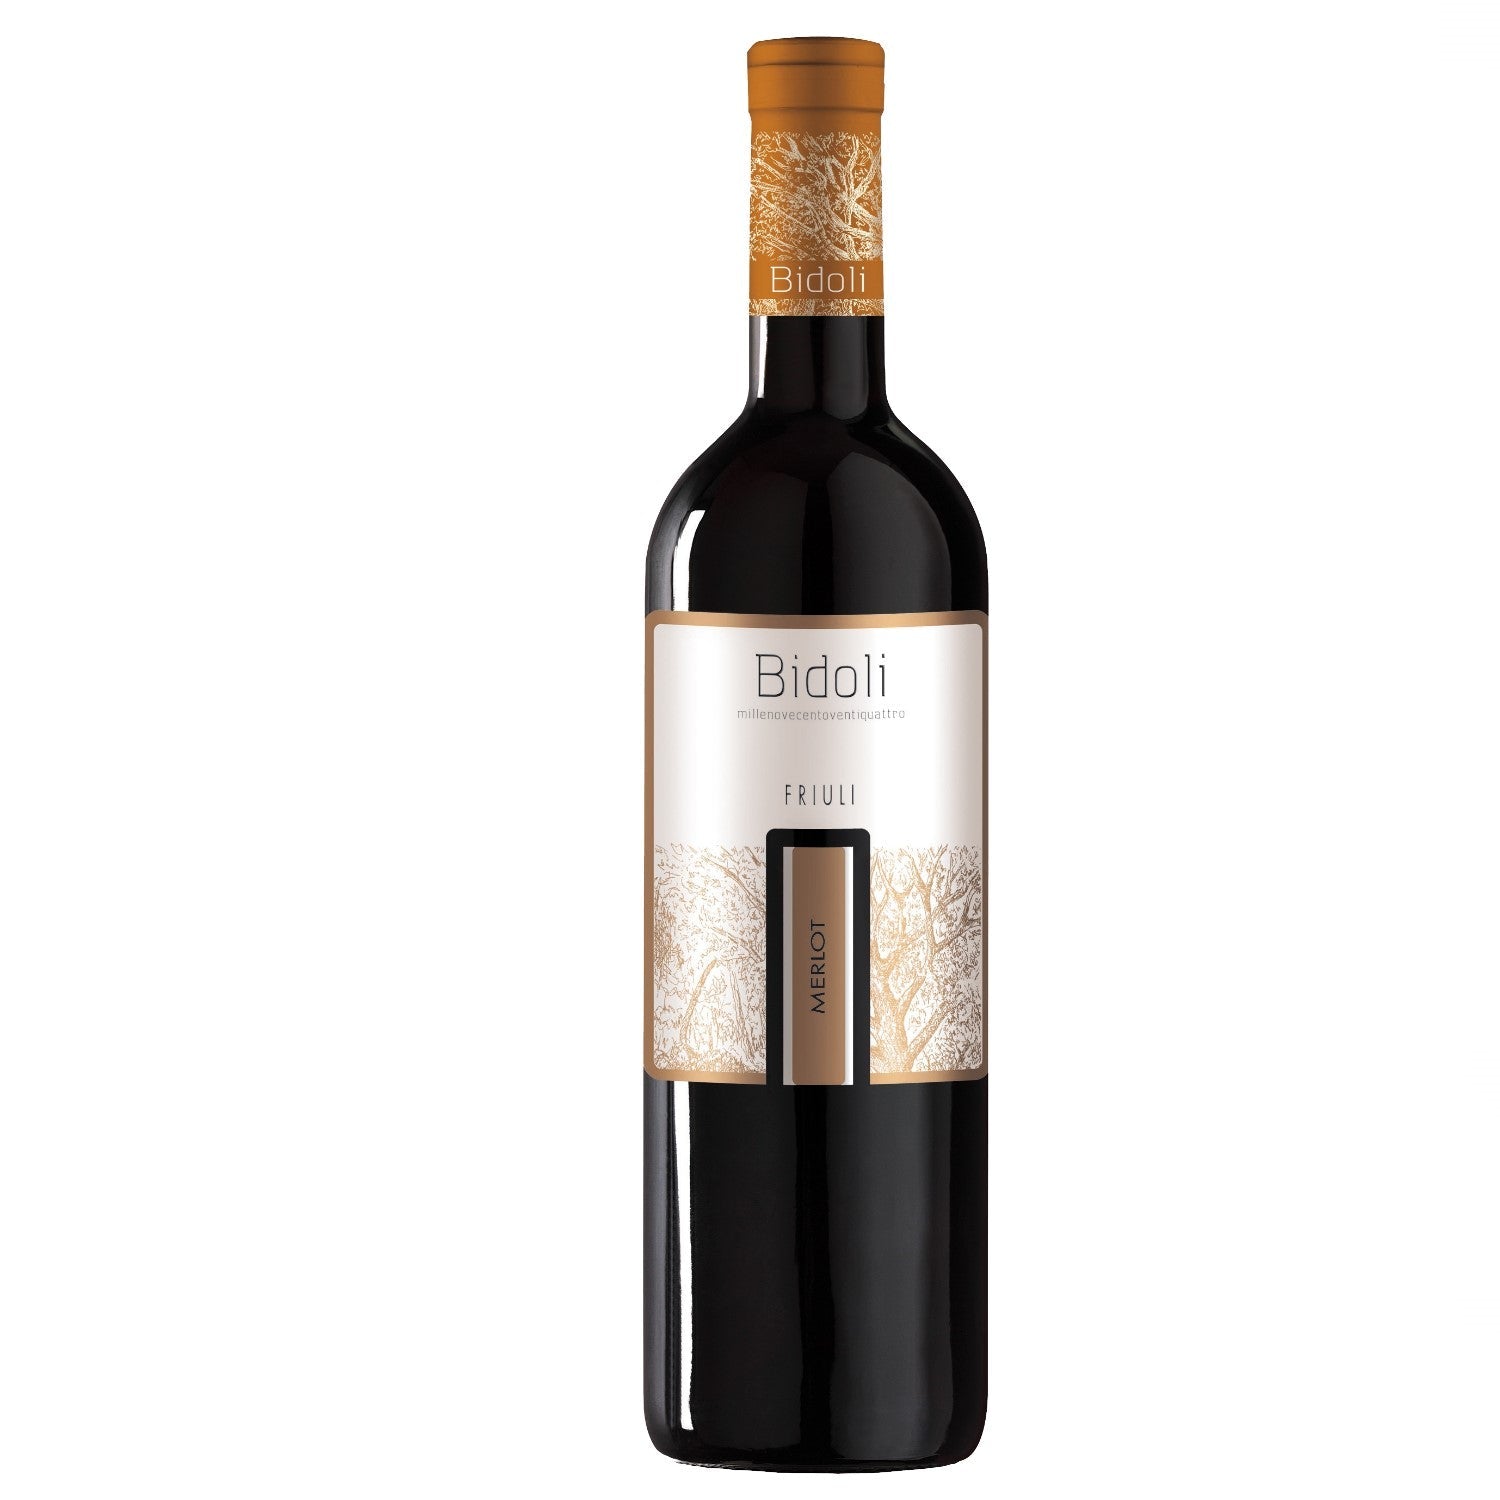 Bidoli Vini Merlot DOC Friuli Grave Rotwein Wein trocken Italien (12 x 0.75l) - Versanel -